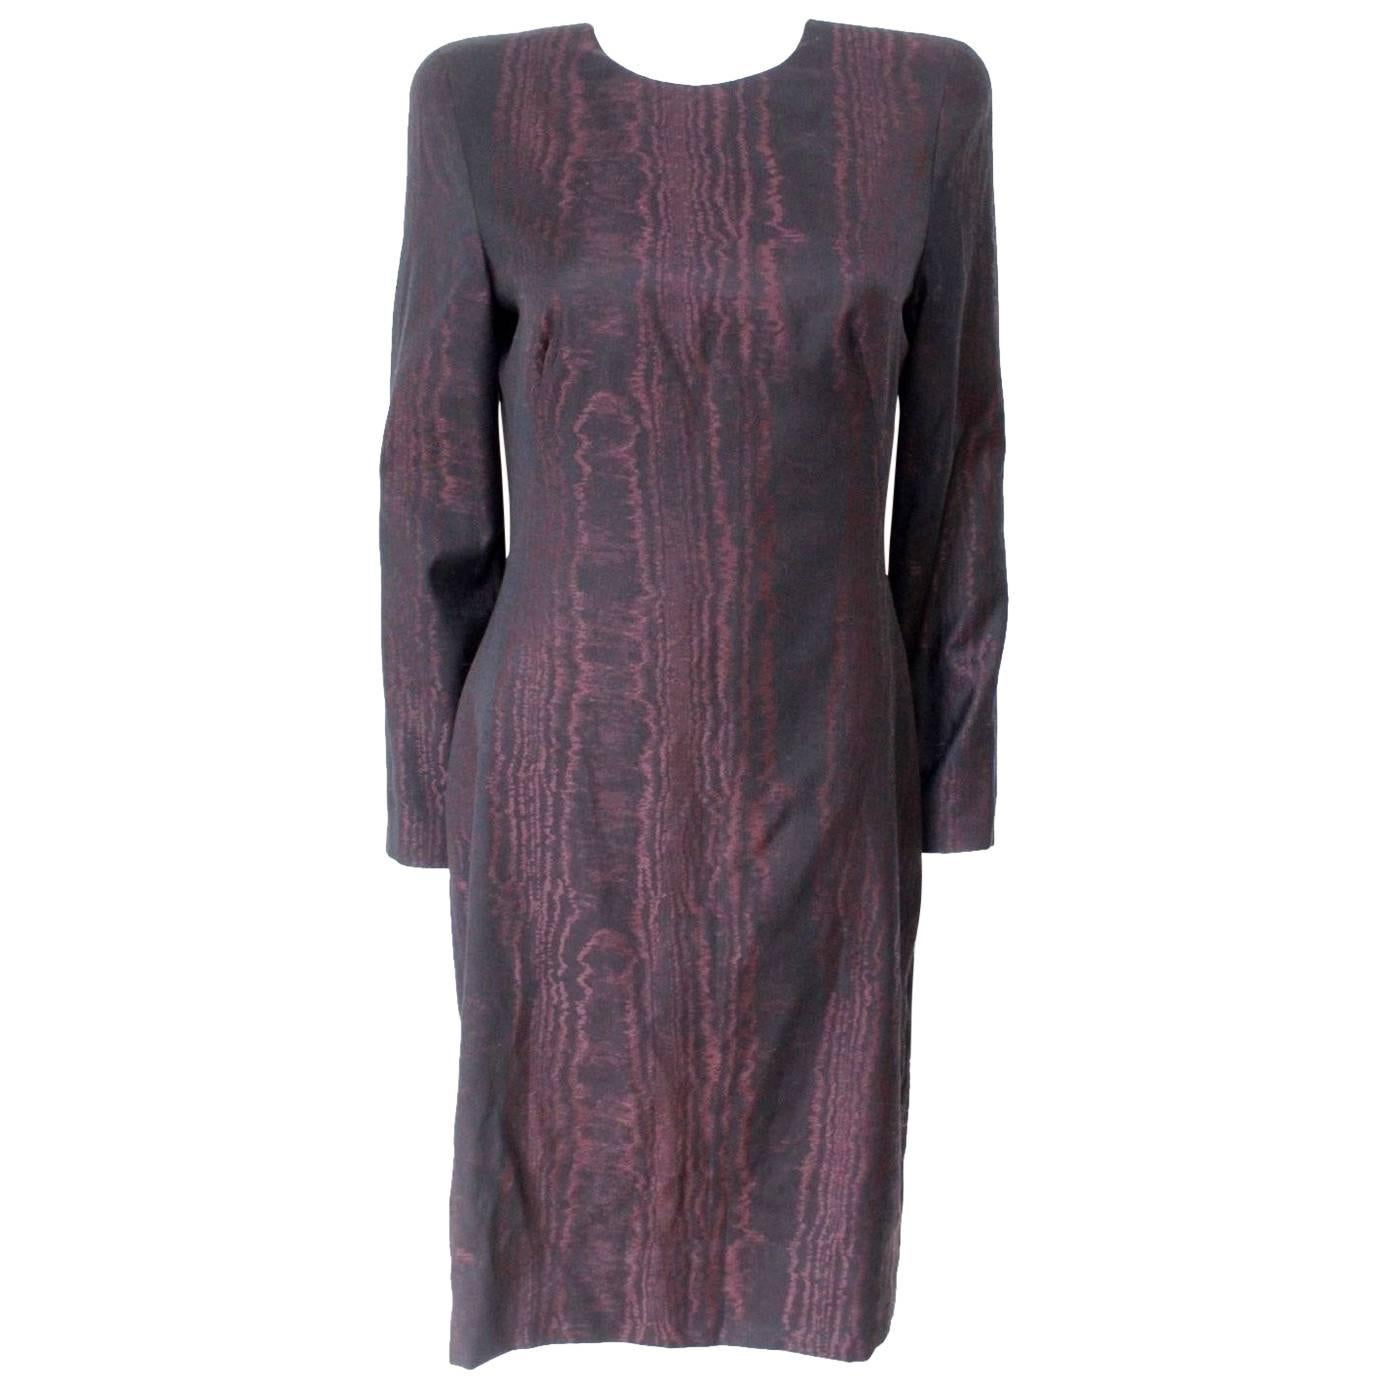  ALEXANDER MCQUEEN Burgundy Black Wool-Crepe Dress It 46 uk 12-14 For Sale